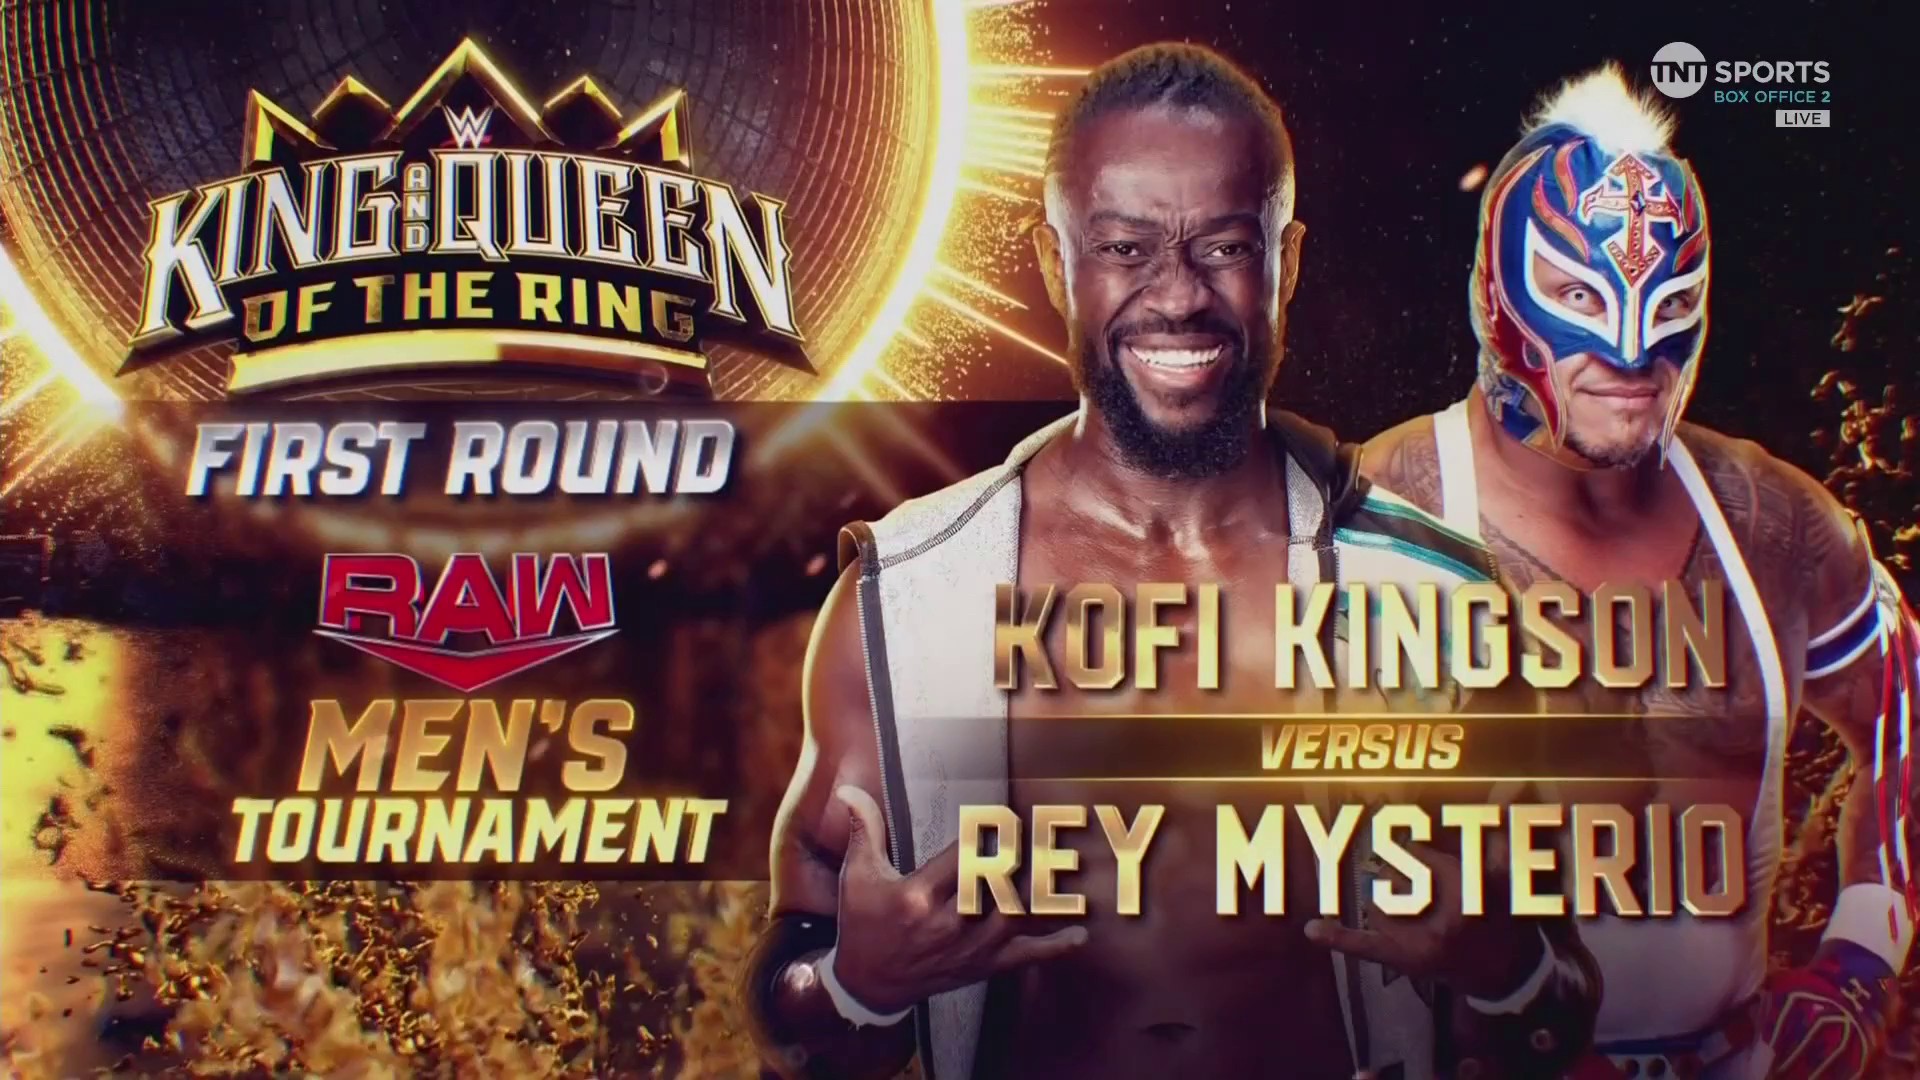 WWE: Verranno mostrati, in qualche modo, i match di King & Queen of the Ring rinviati al weekend?